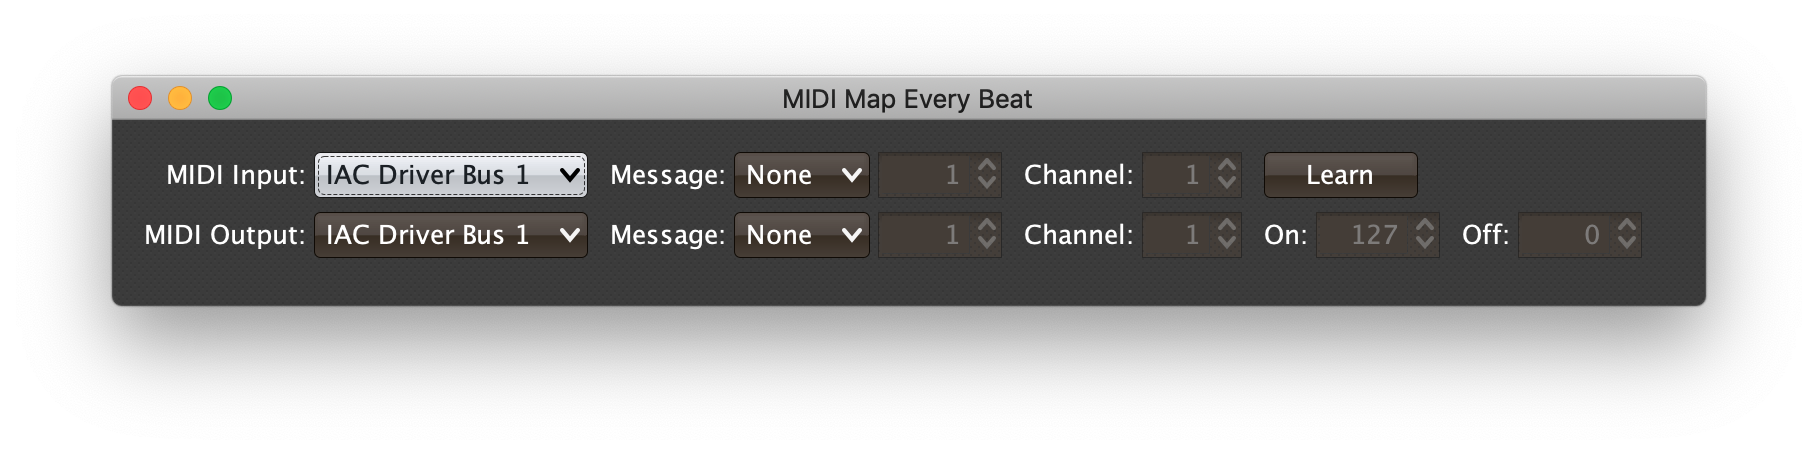 MIDI mapping interface